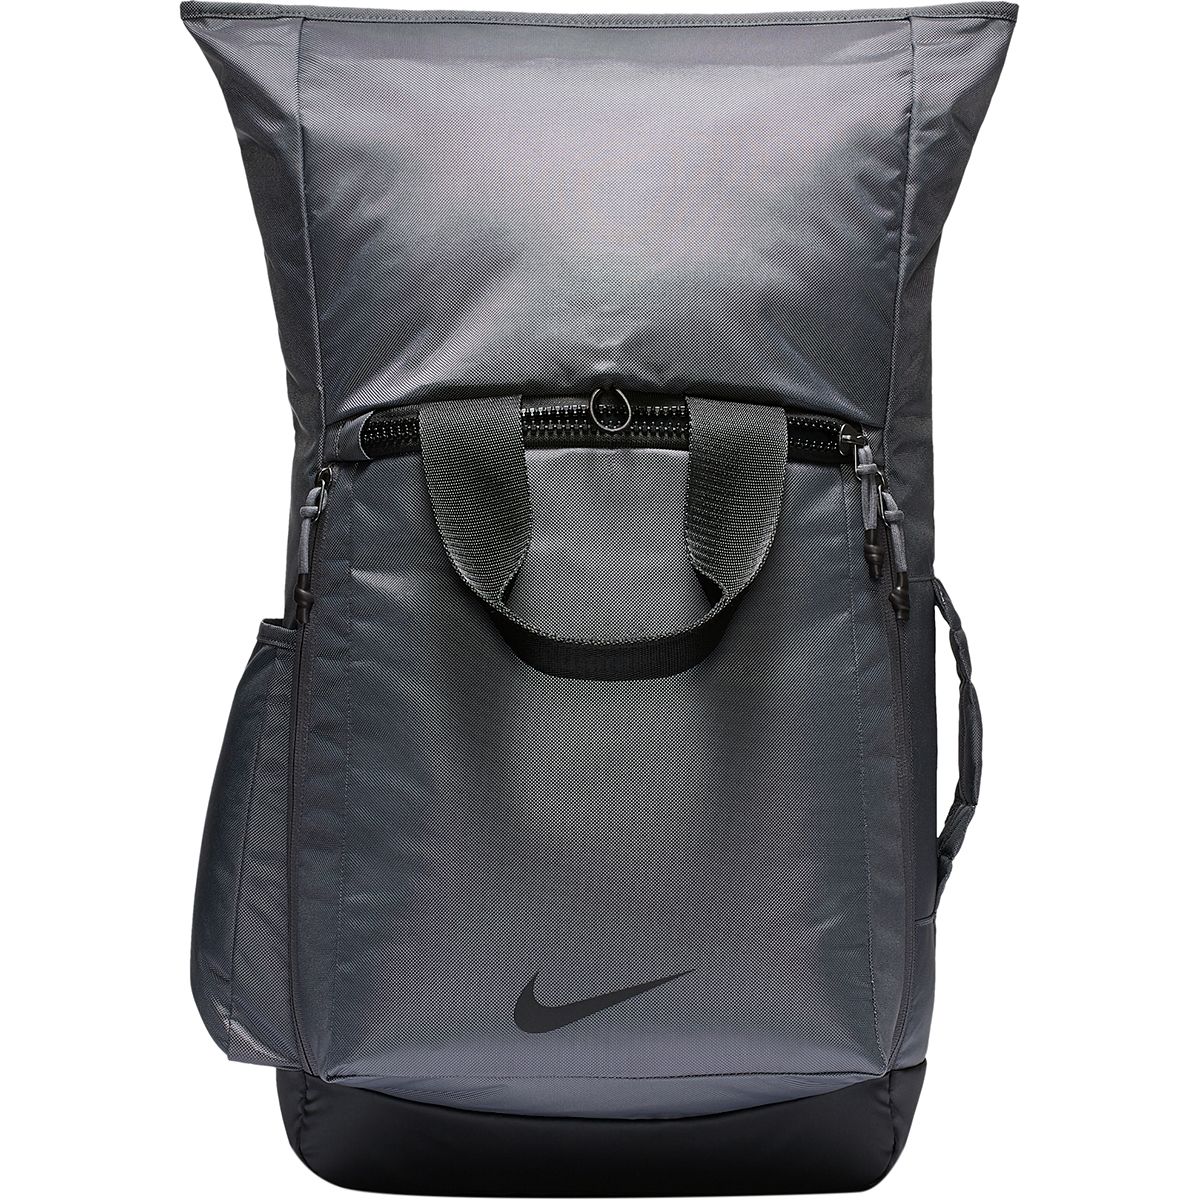 Nike Vapor Energy 2.0 Backpack - Accessories